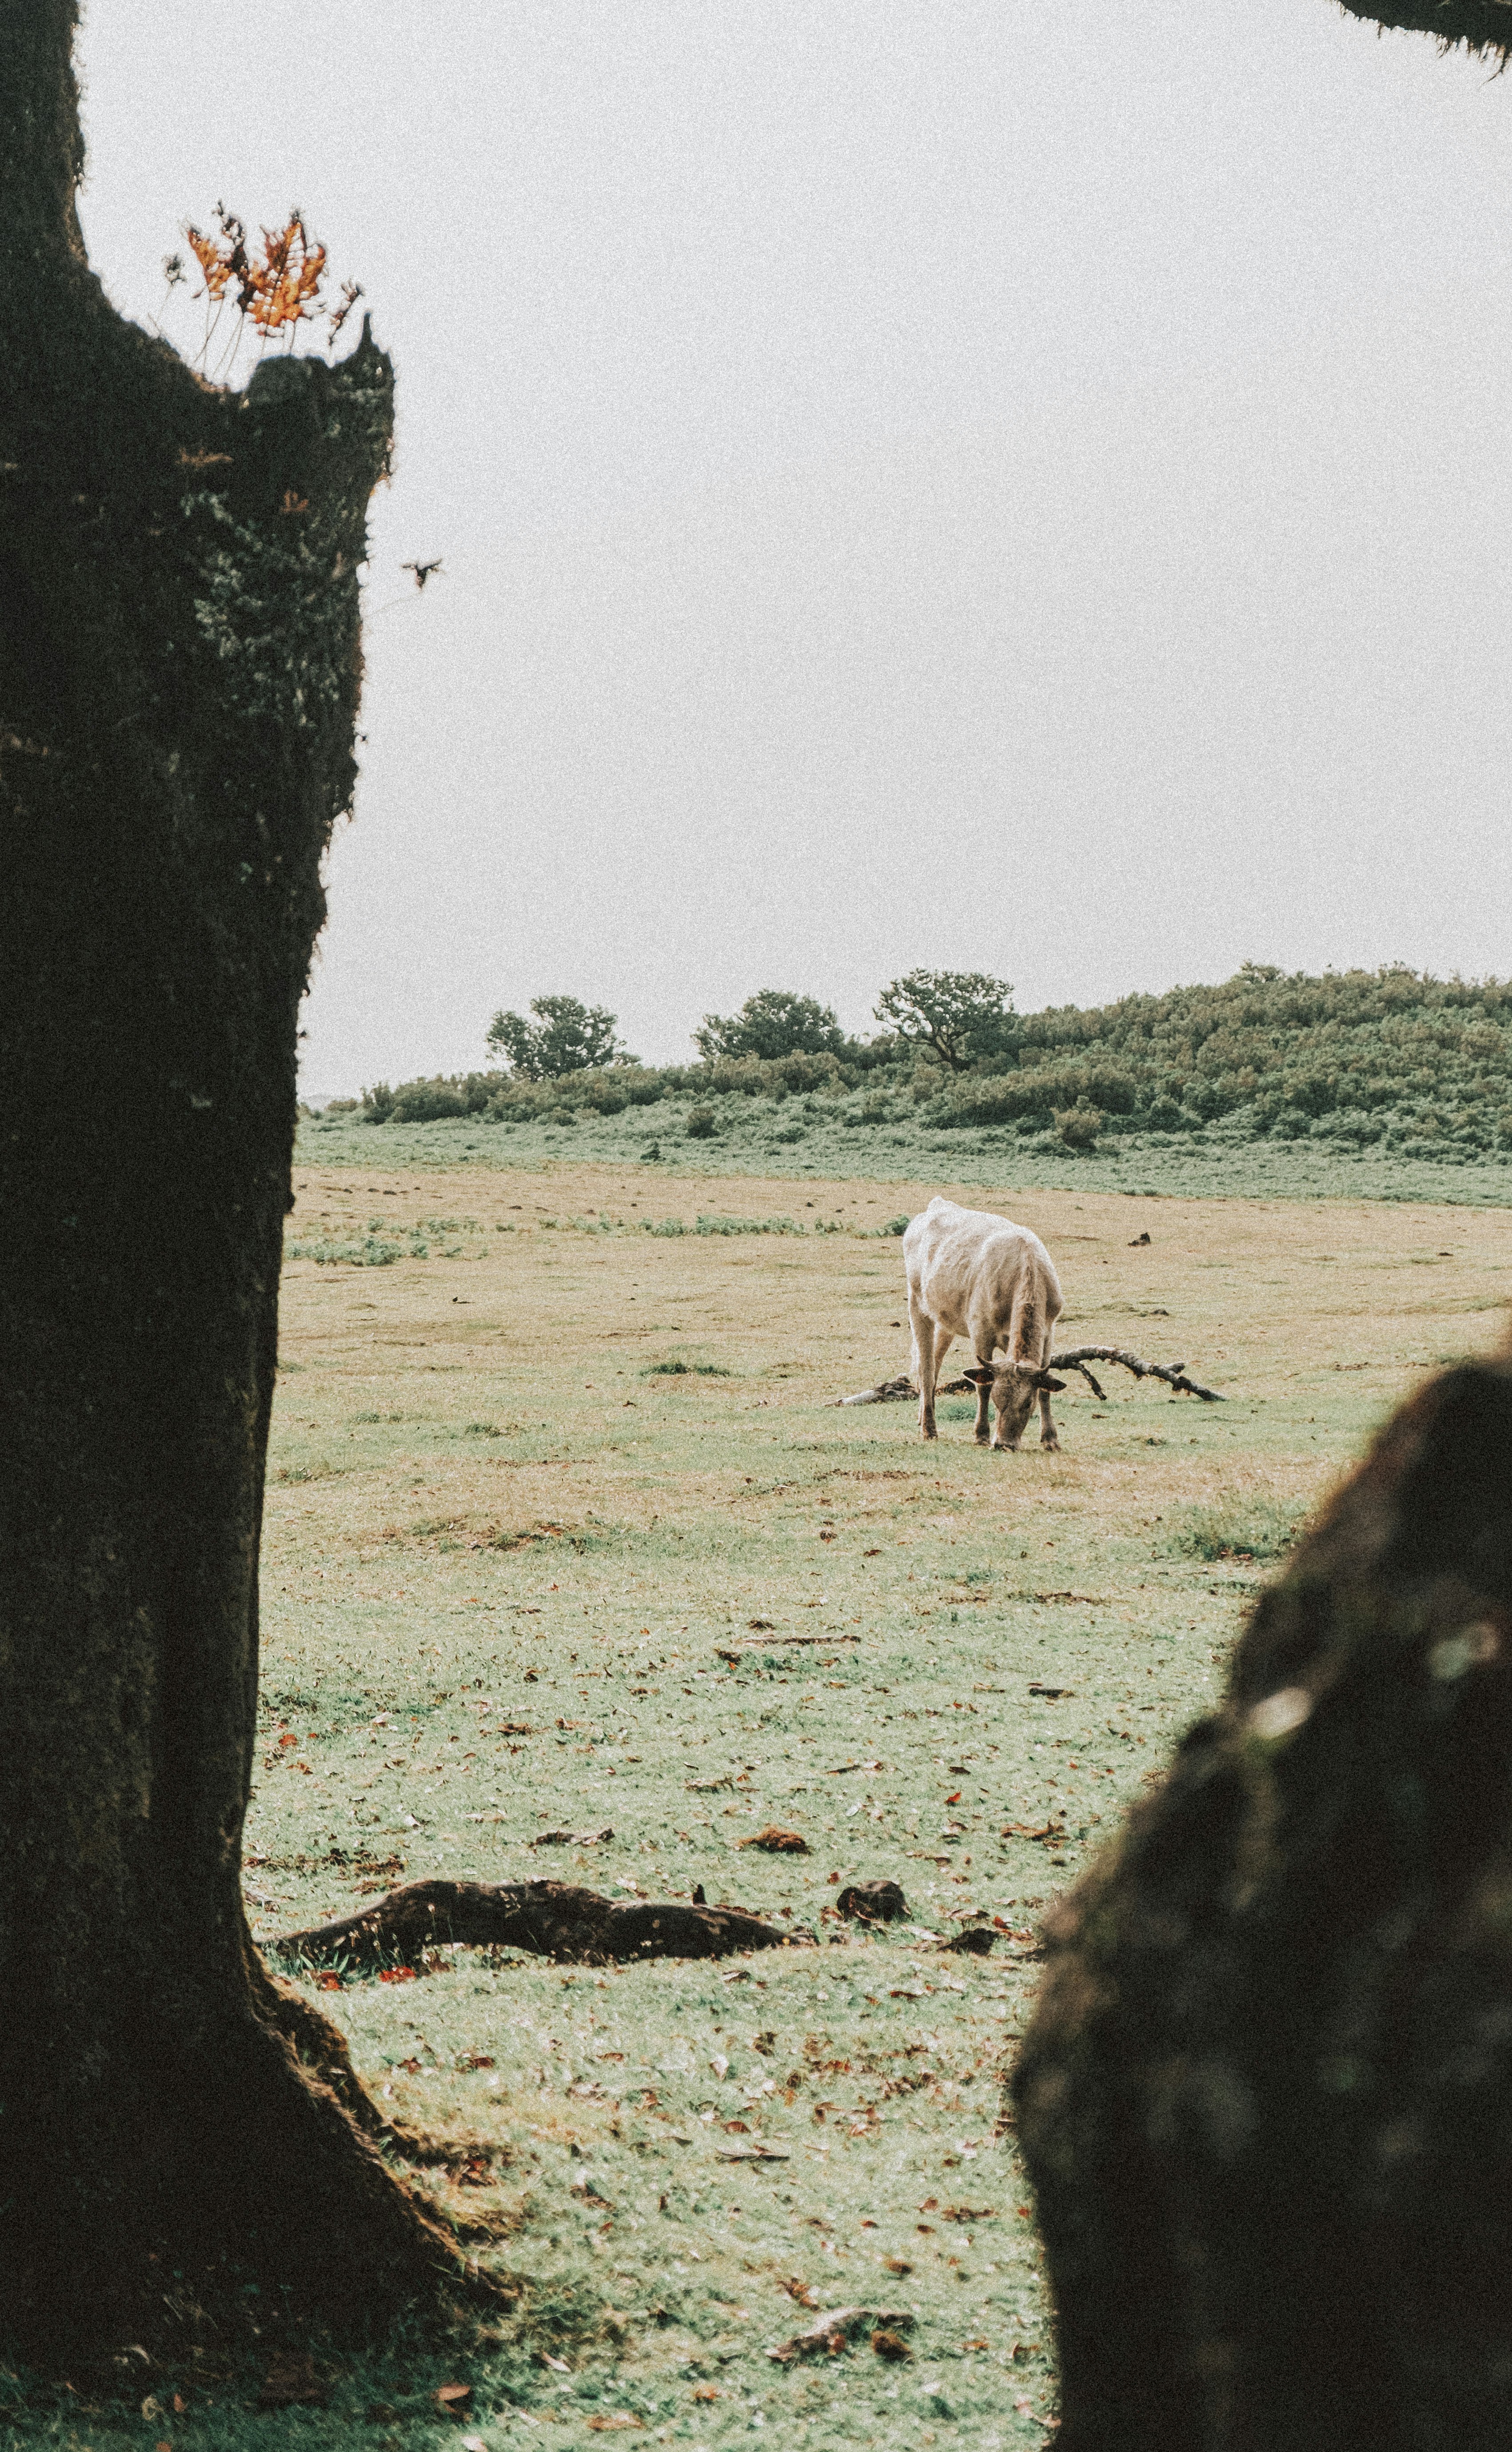 white horse eating grass beside tree during daytime